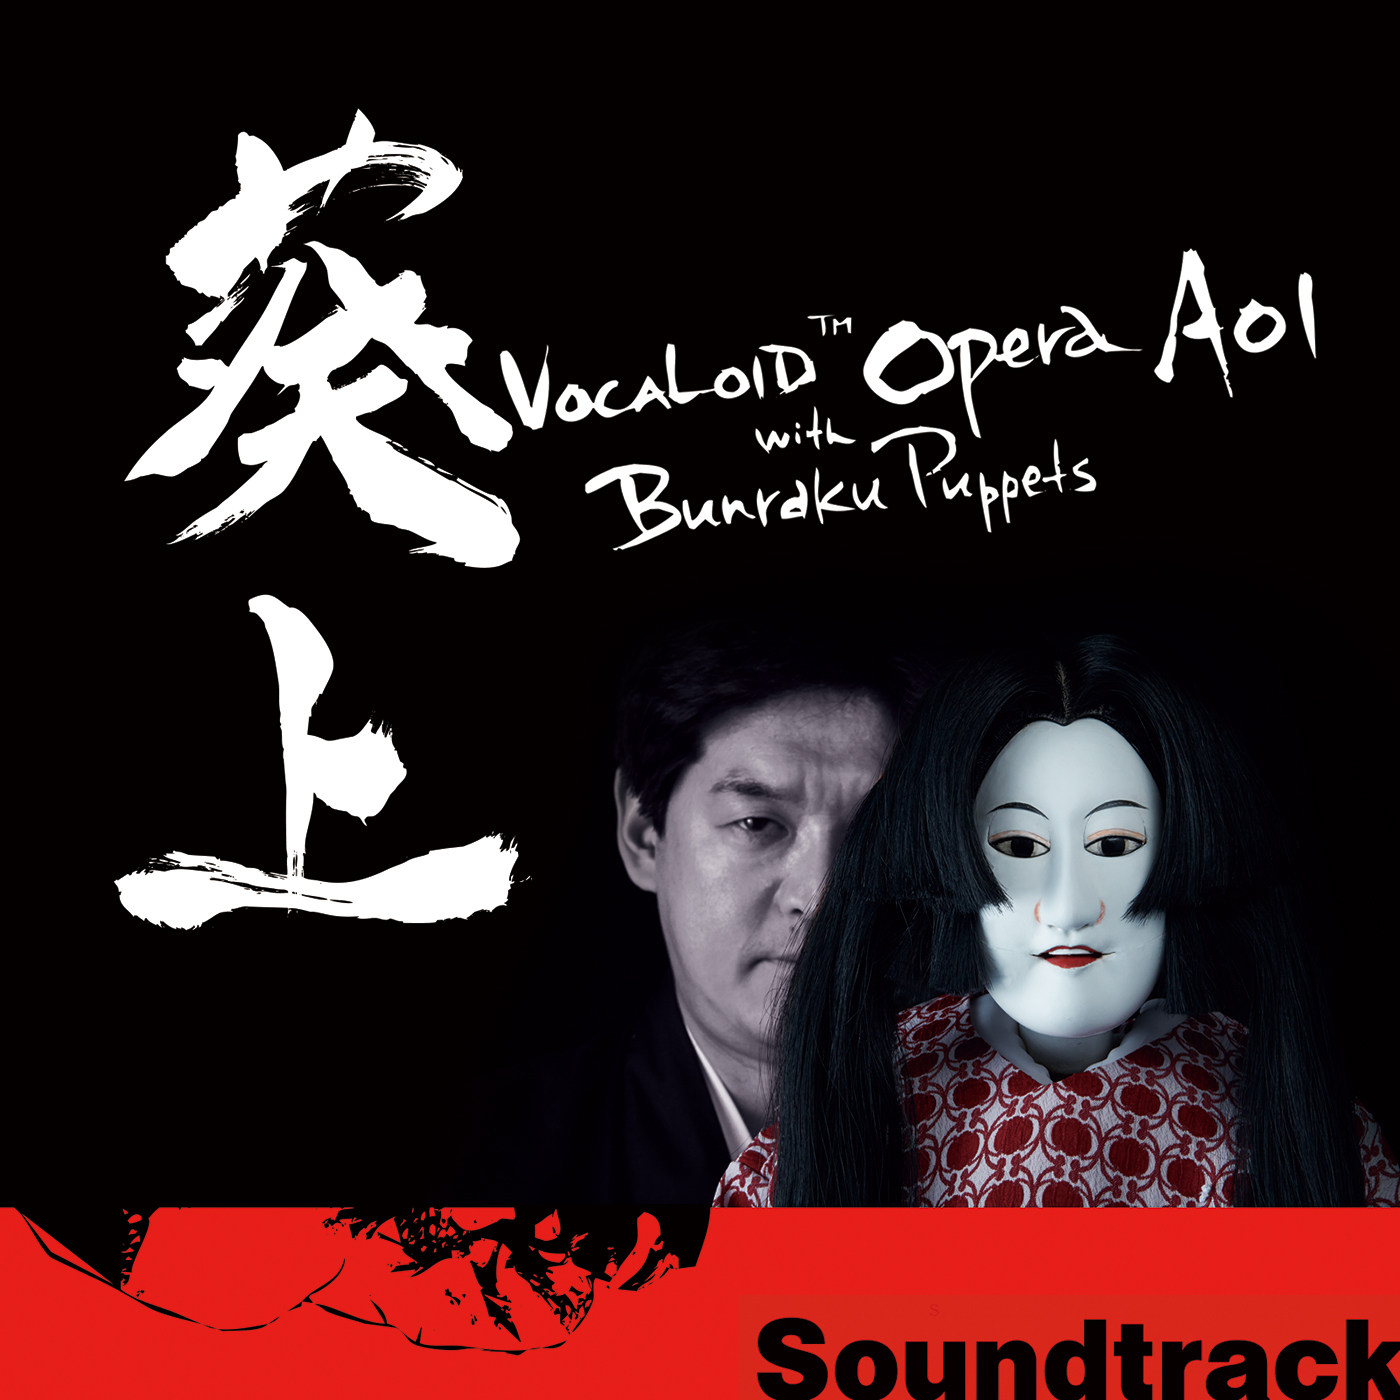 VOCALOID Opera Aoi